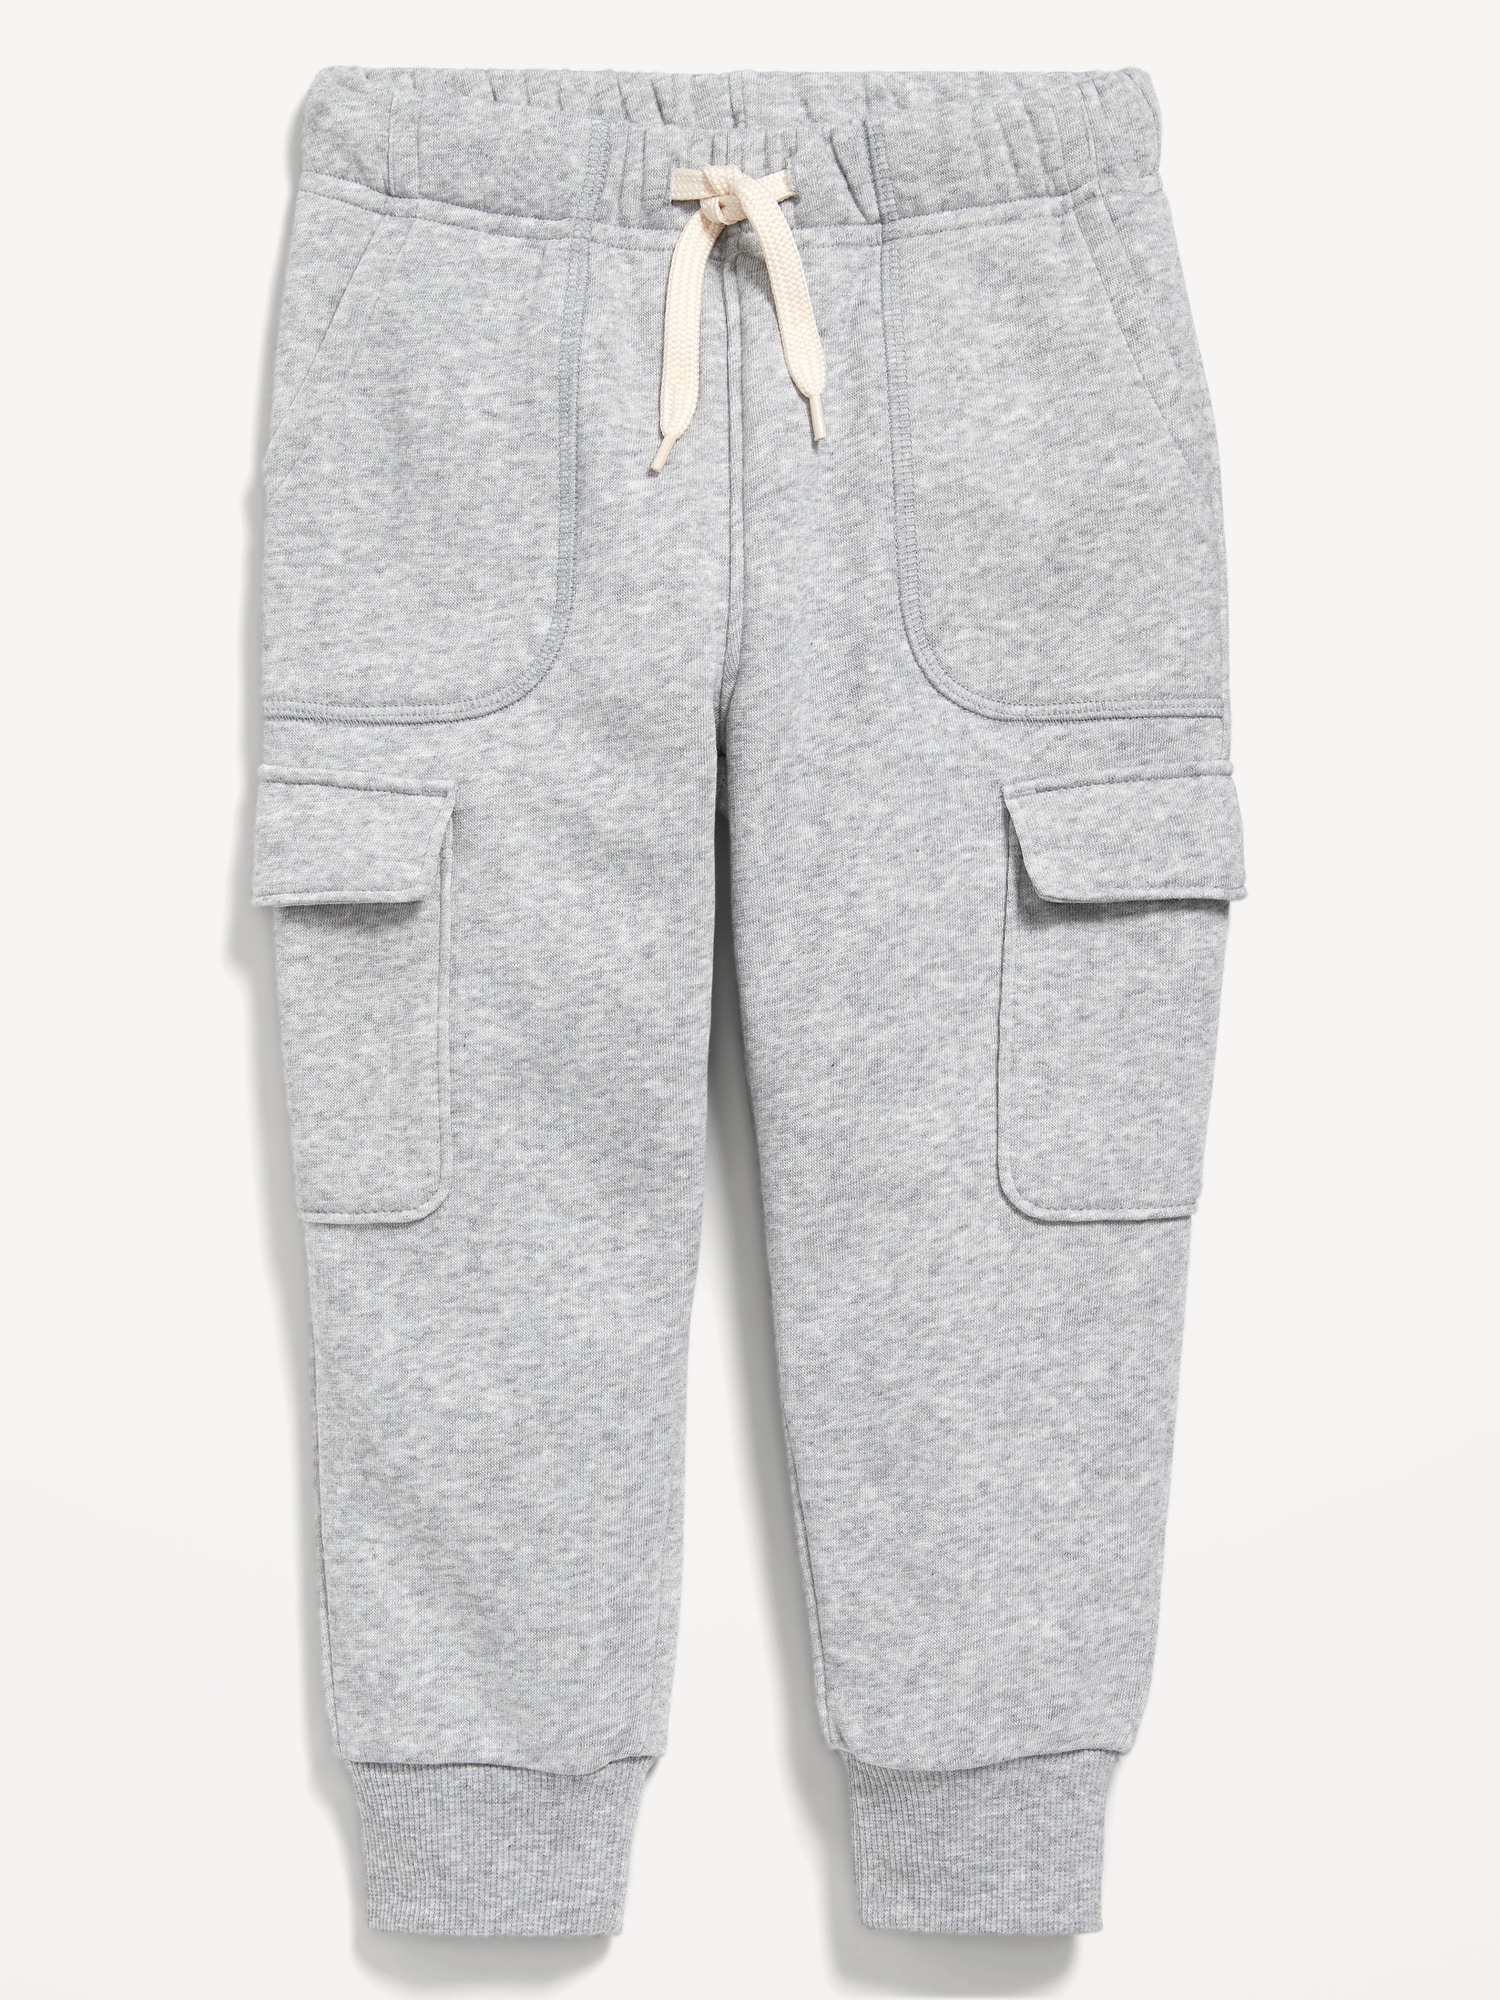 Old Navy Printed Micro Performance Fleece Pajama Pants for Women  Fleece  pajama pants Pants for women Fleece pajamas